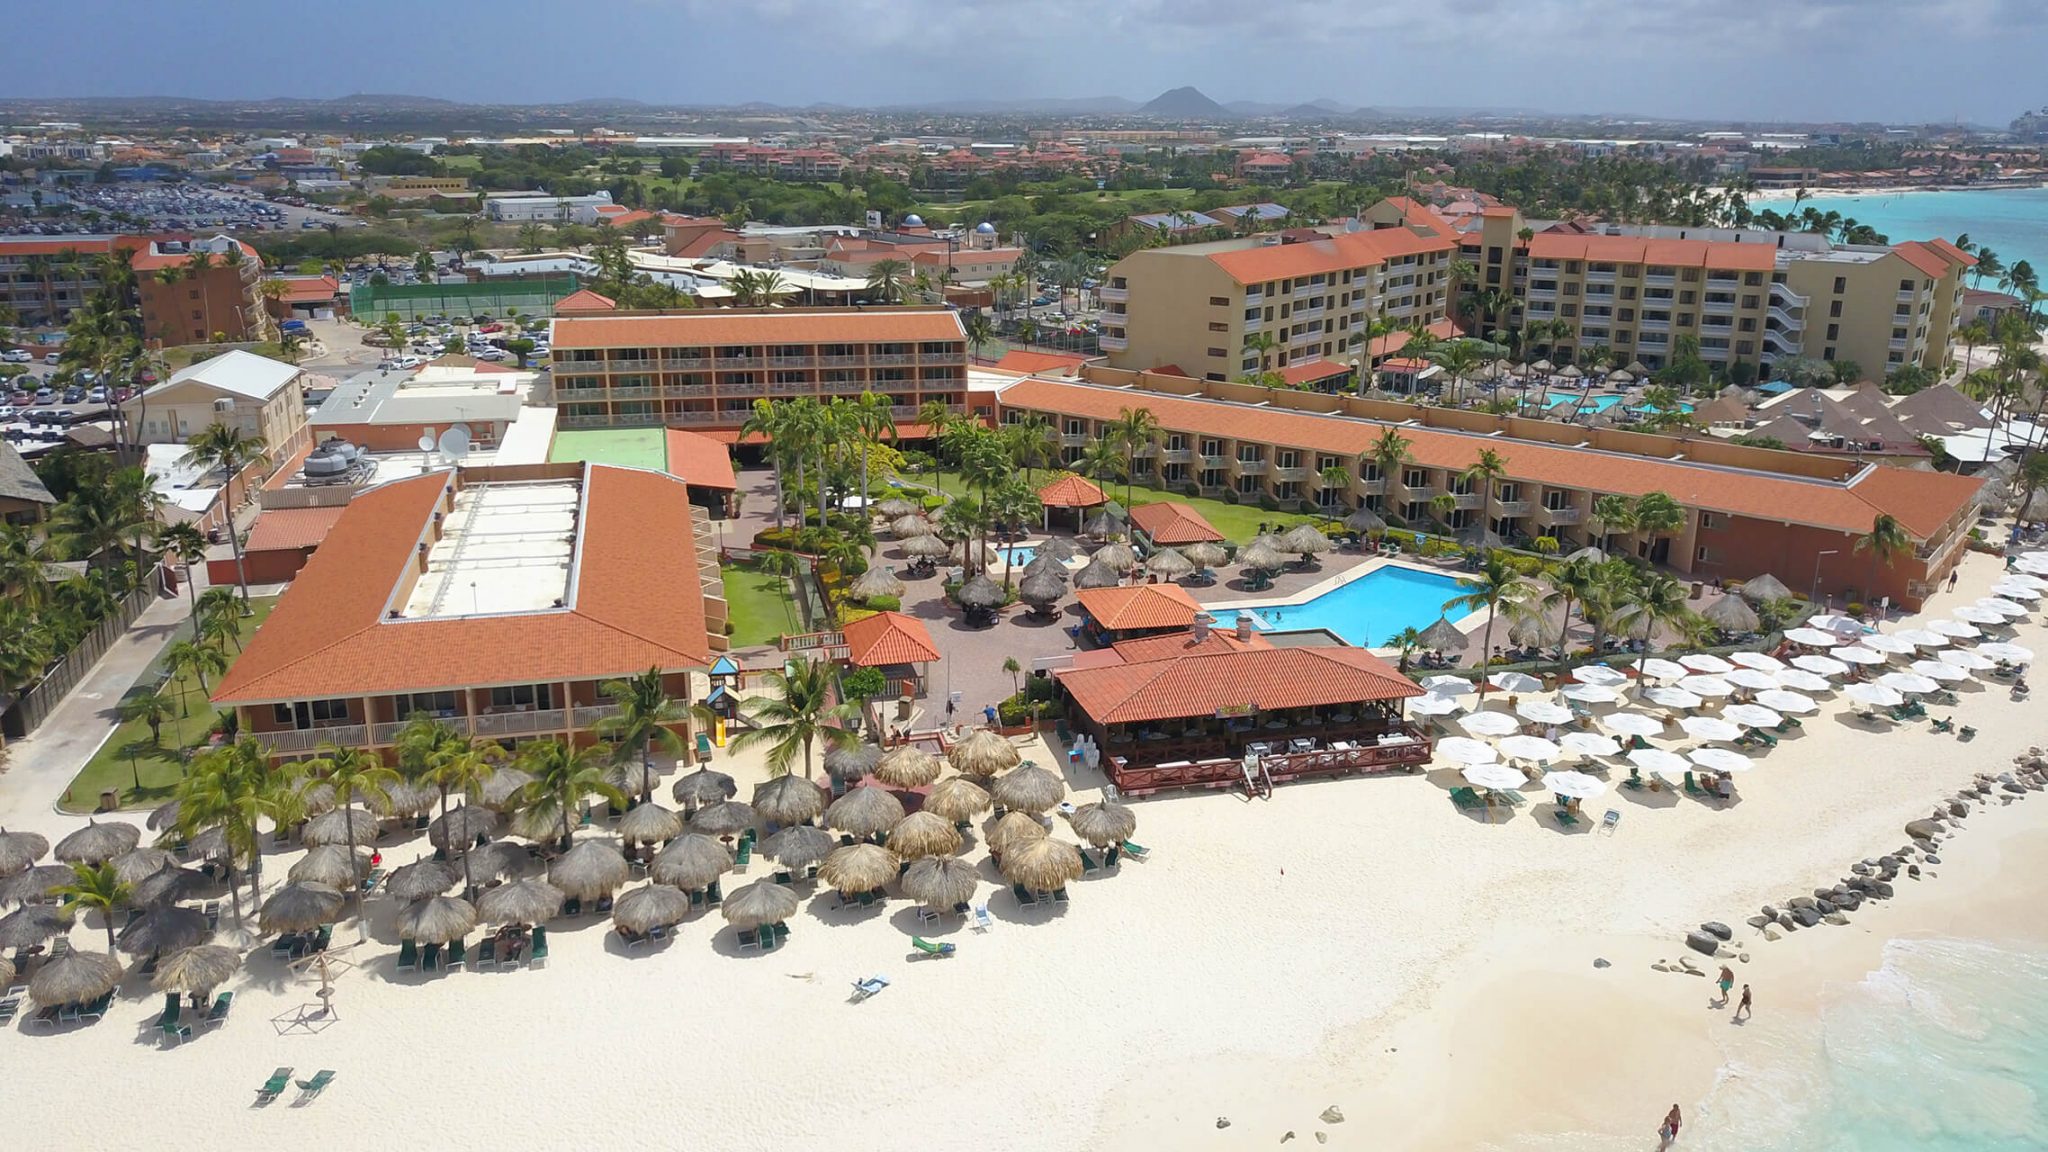 About Beach Club Resort The Aruba Beach Club Resort